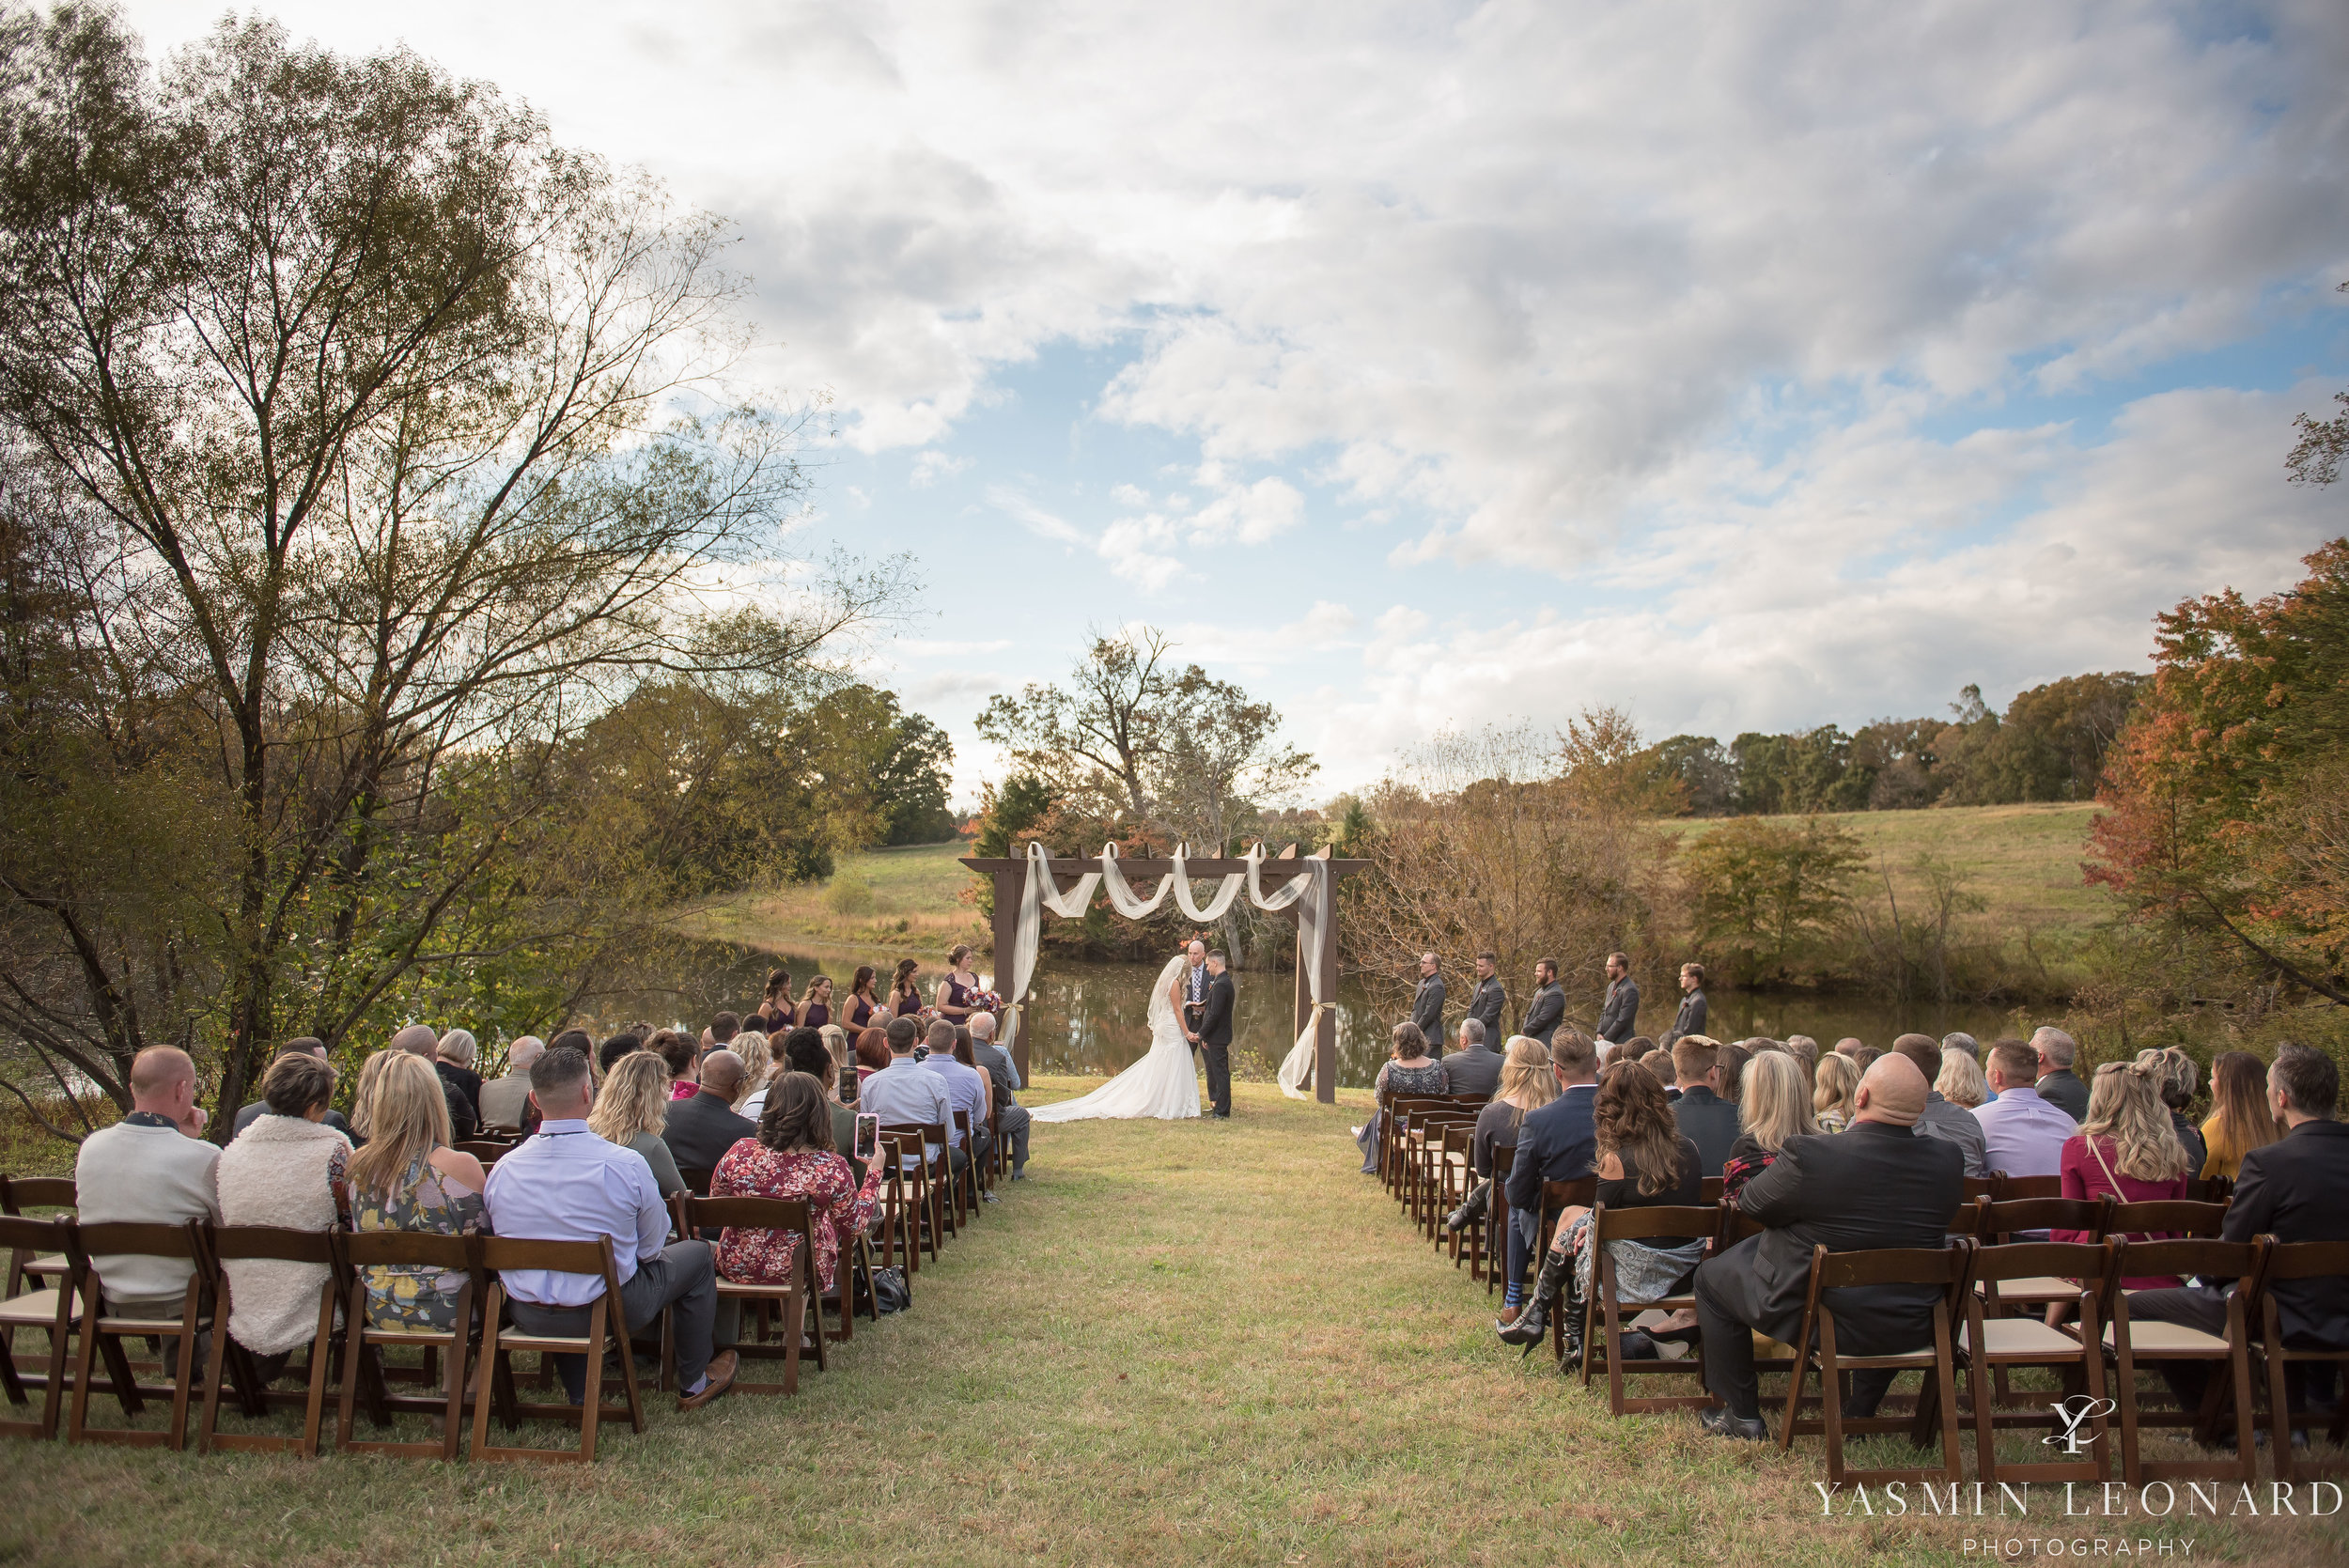 NC Wedding Photographer - Yasmin Leonard Photography - Summerfield Farms - High Point Wedding Photographer - Labri at Linwood - Barns in North Carolina - NC Barn Wedding-27.jpg